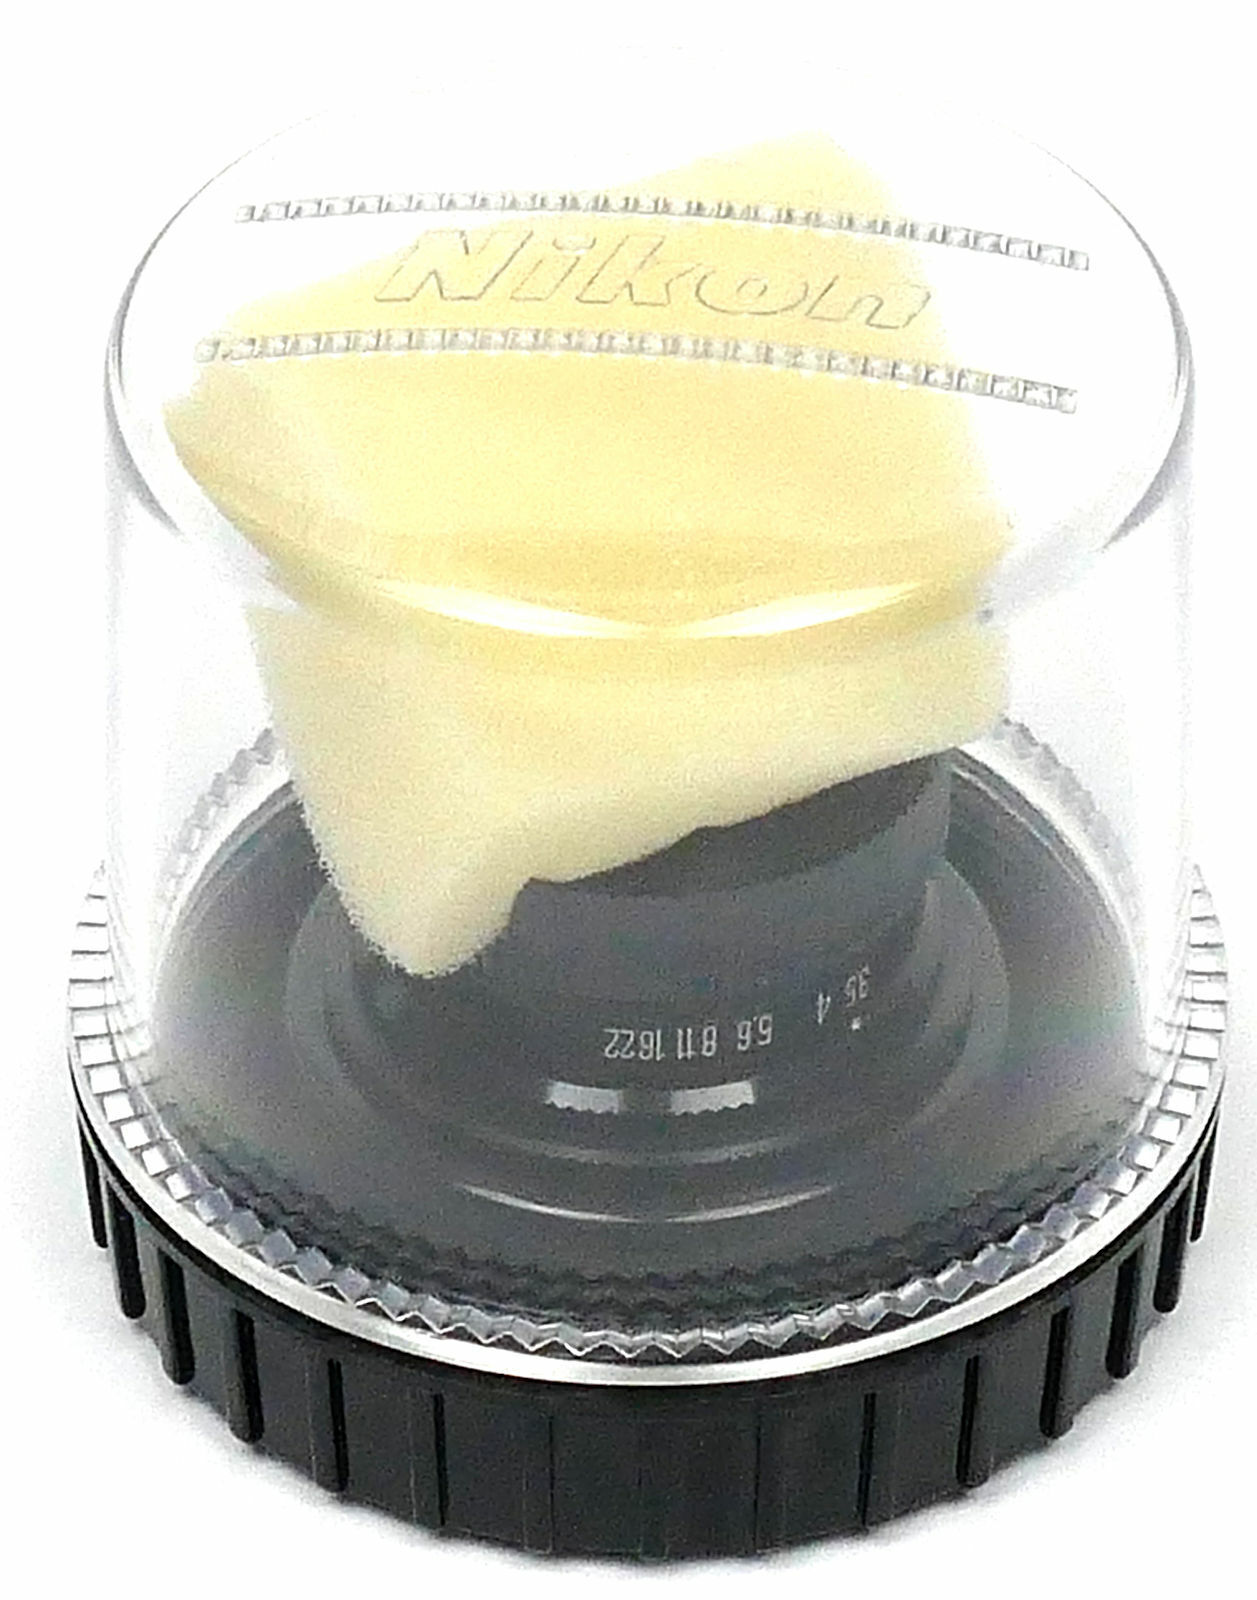 Mint EL-OMEGAR L455-110 50mm f:3.5 Enlargement Lens + Nikon Bubble Made in Japan